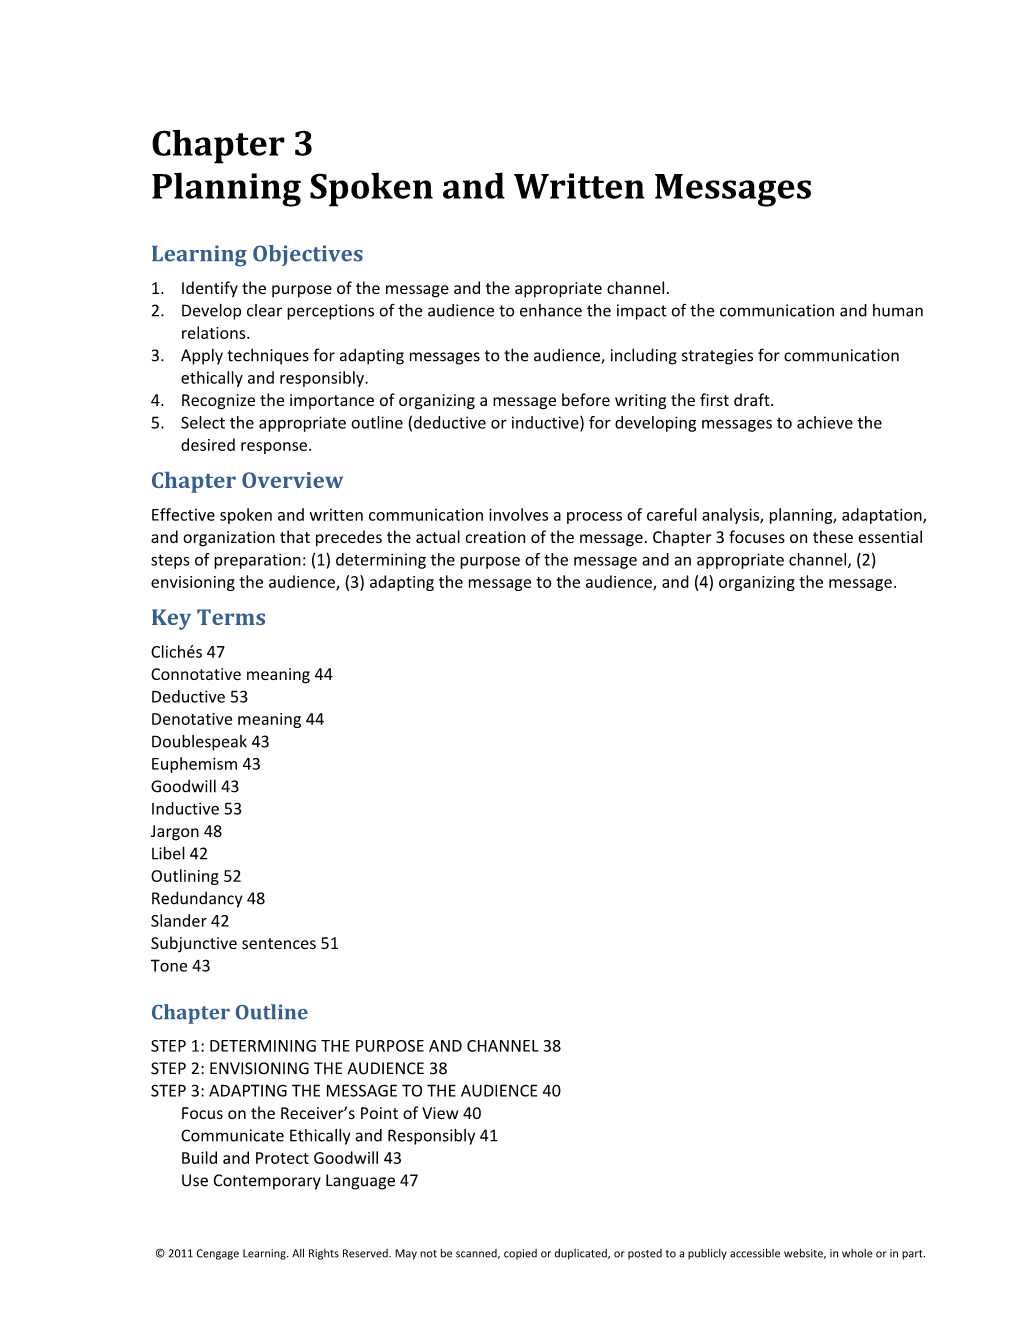 Chapter 3 Planning Spoken and Written Message